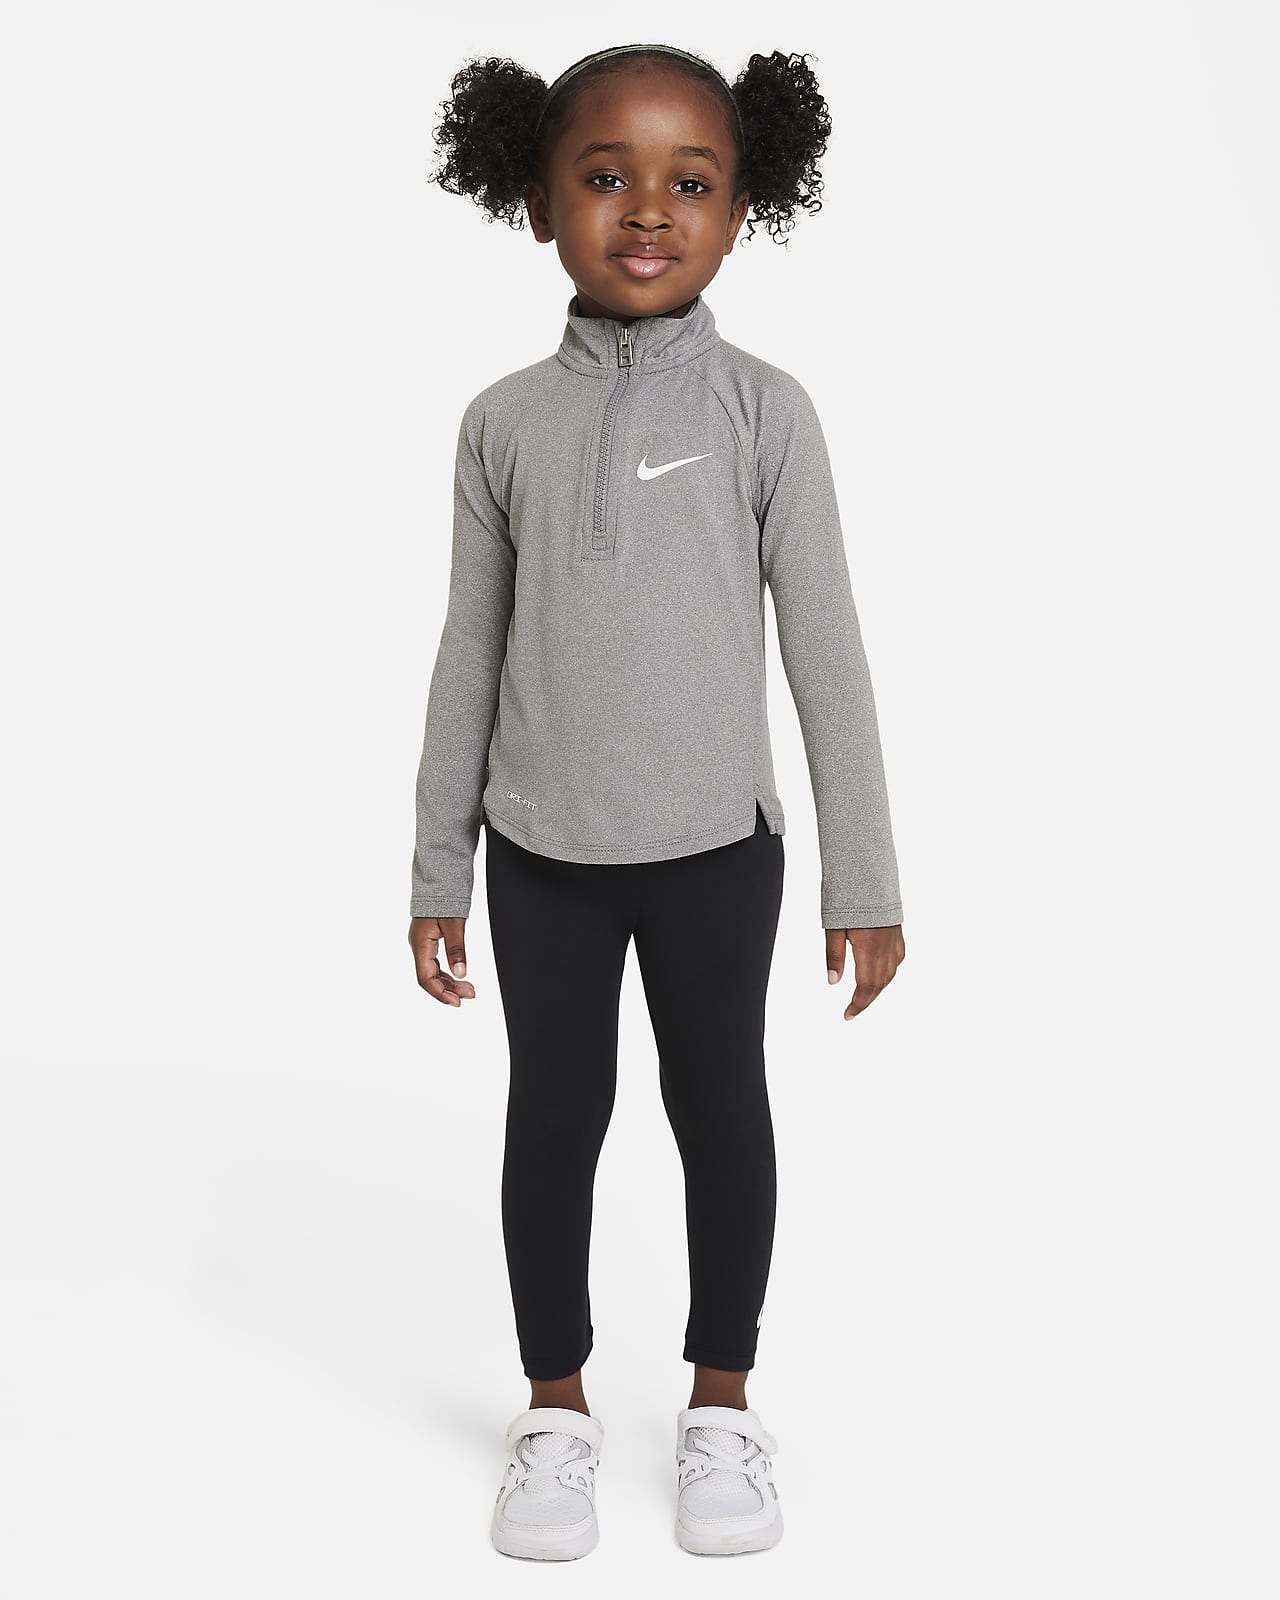 Shop Nike Girls' Leg a See Leggings 36C723-042 grey | SNIPES USA